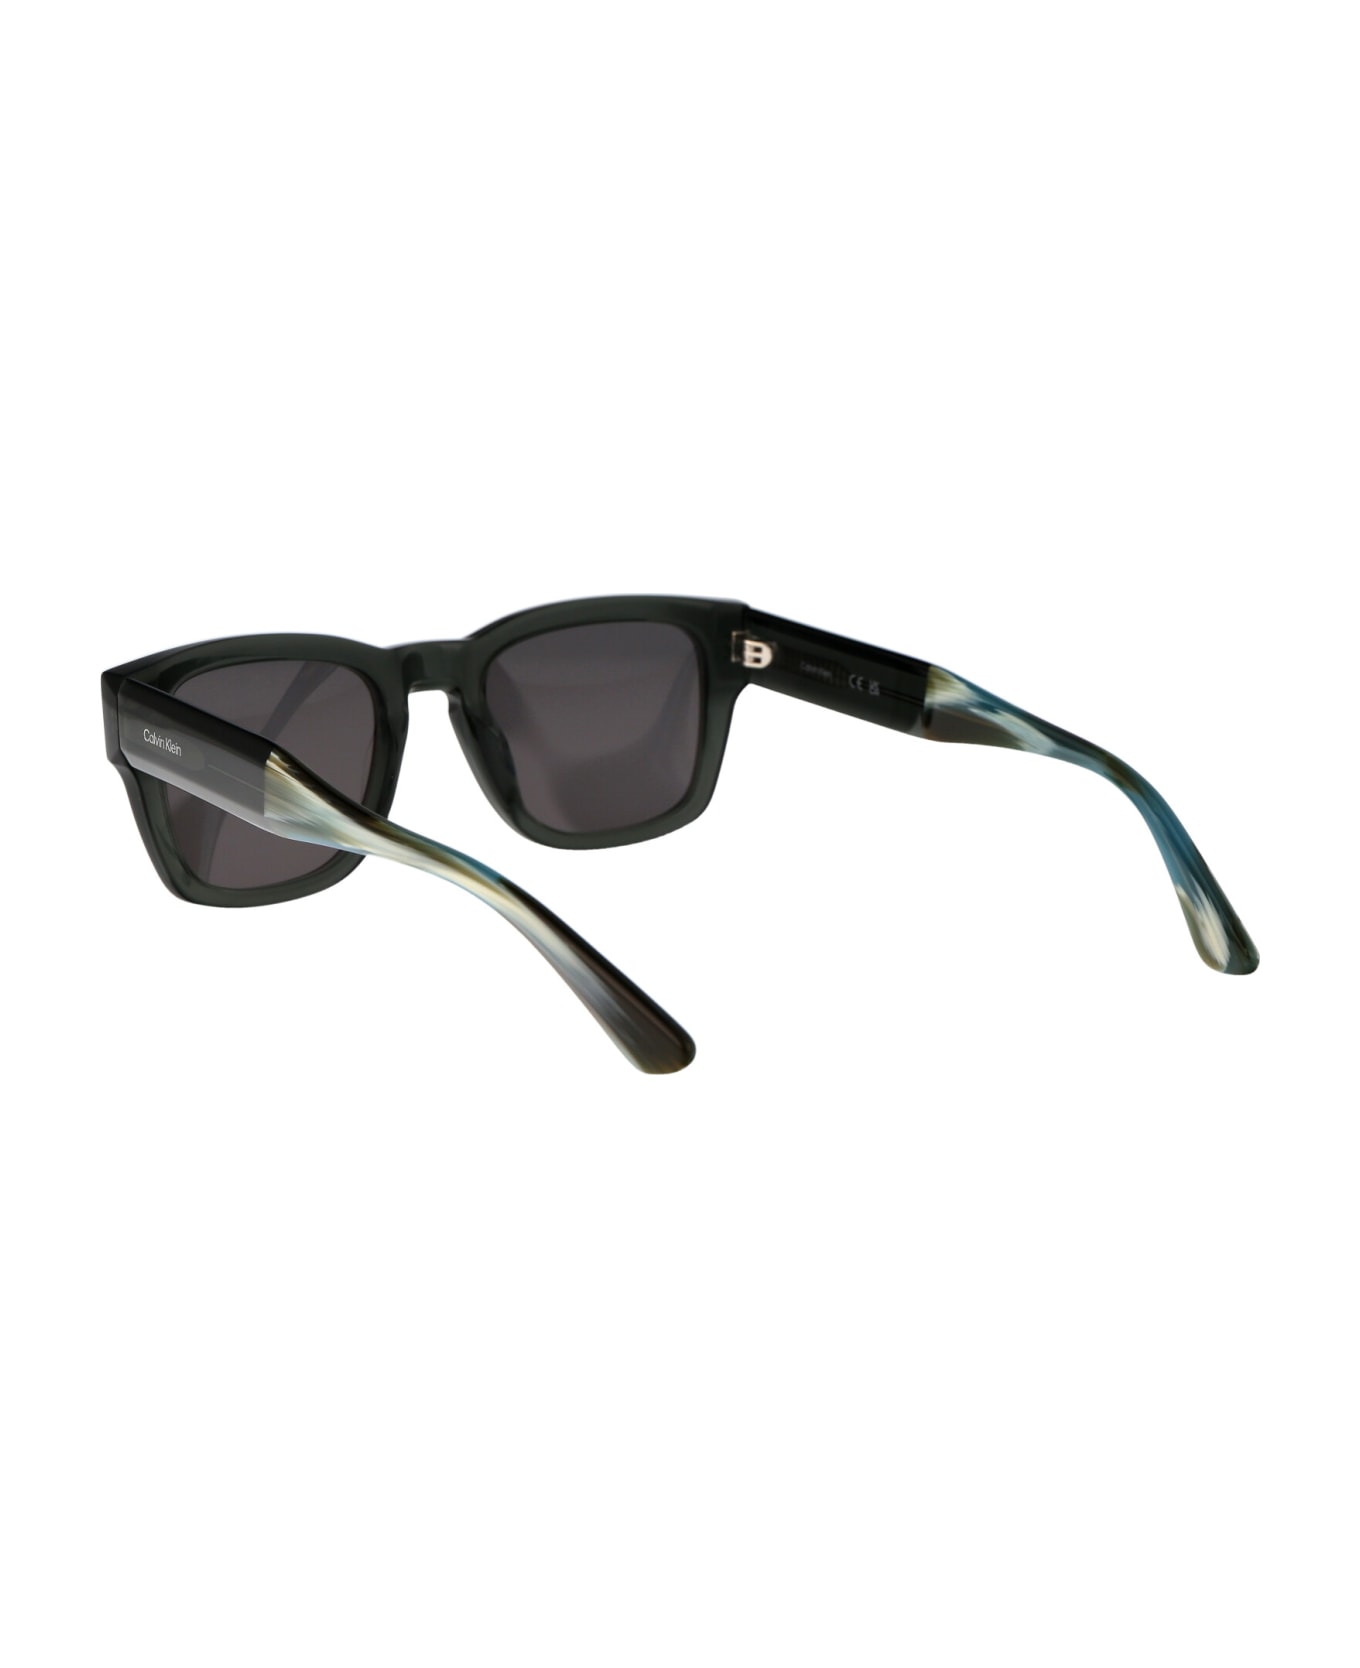 Calvin Klein Ck23539s Sunglasses - 035 GREY